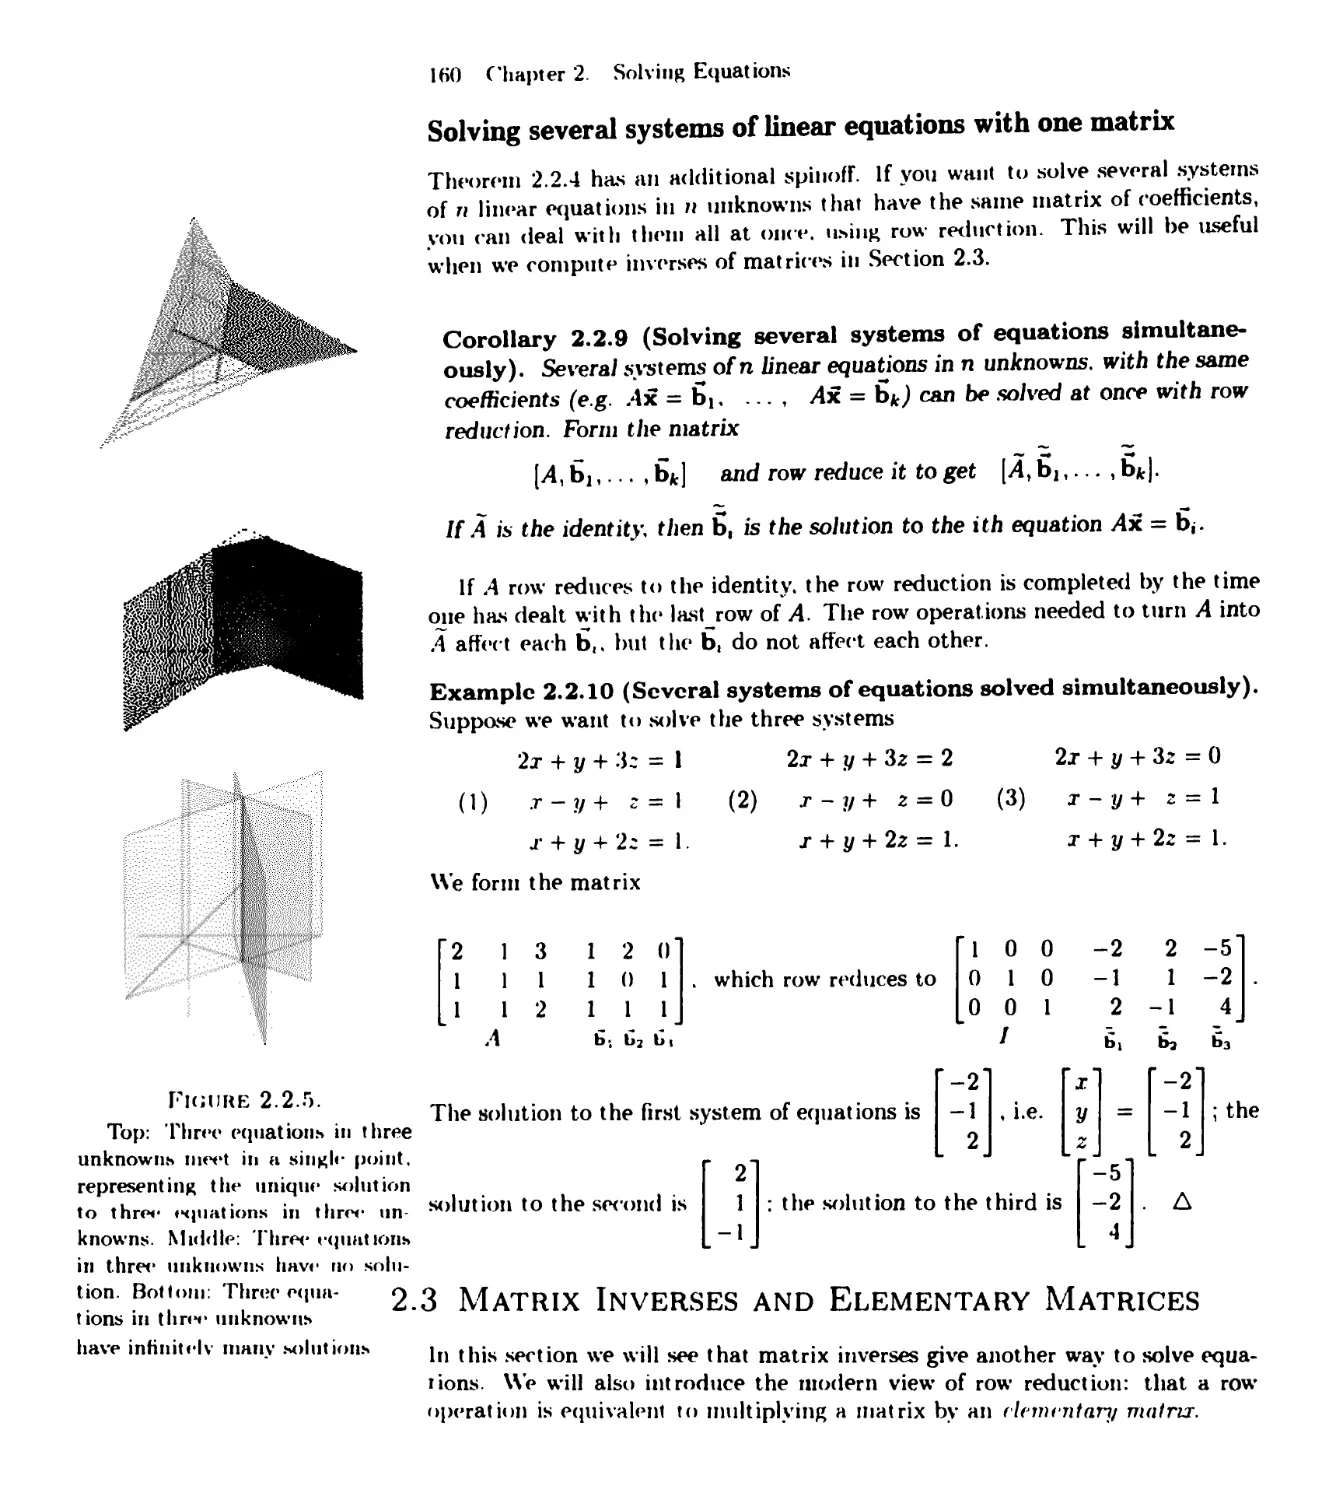 2.3 Matrix Inverses and Elementary Matrices